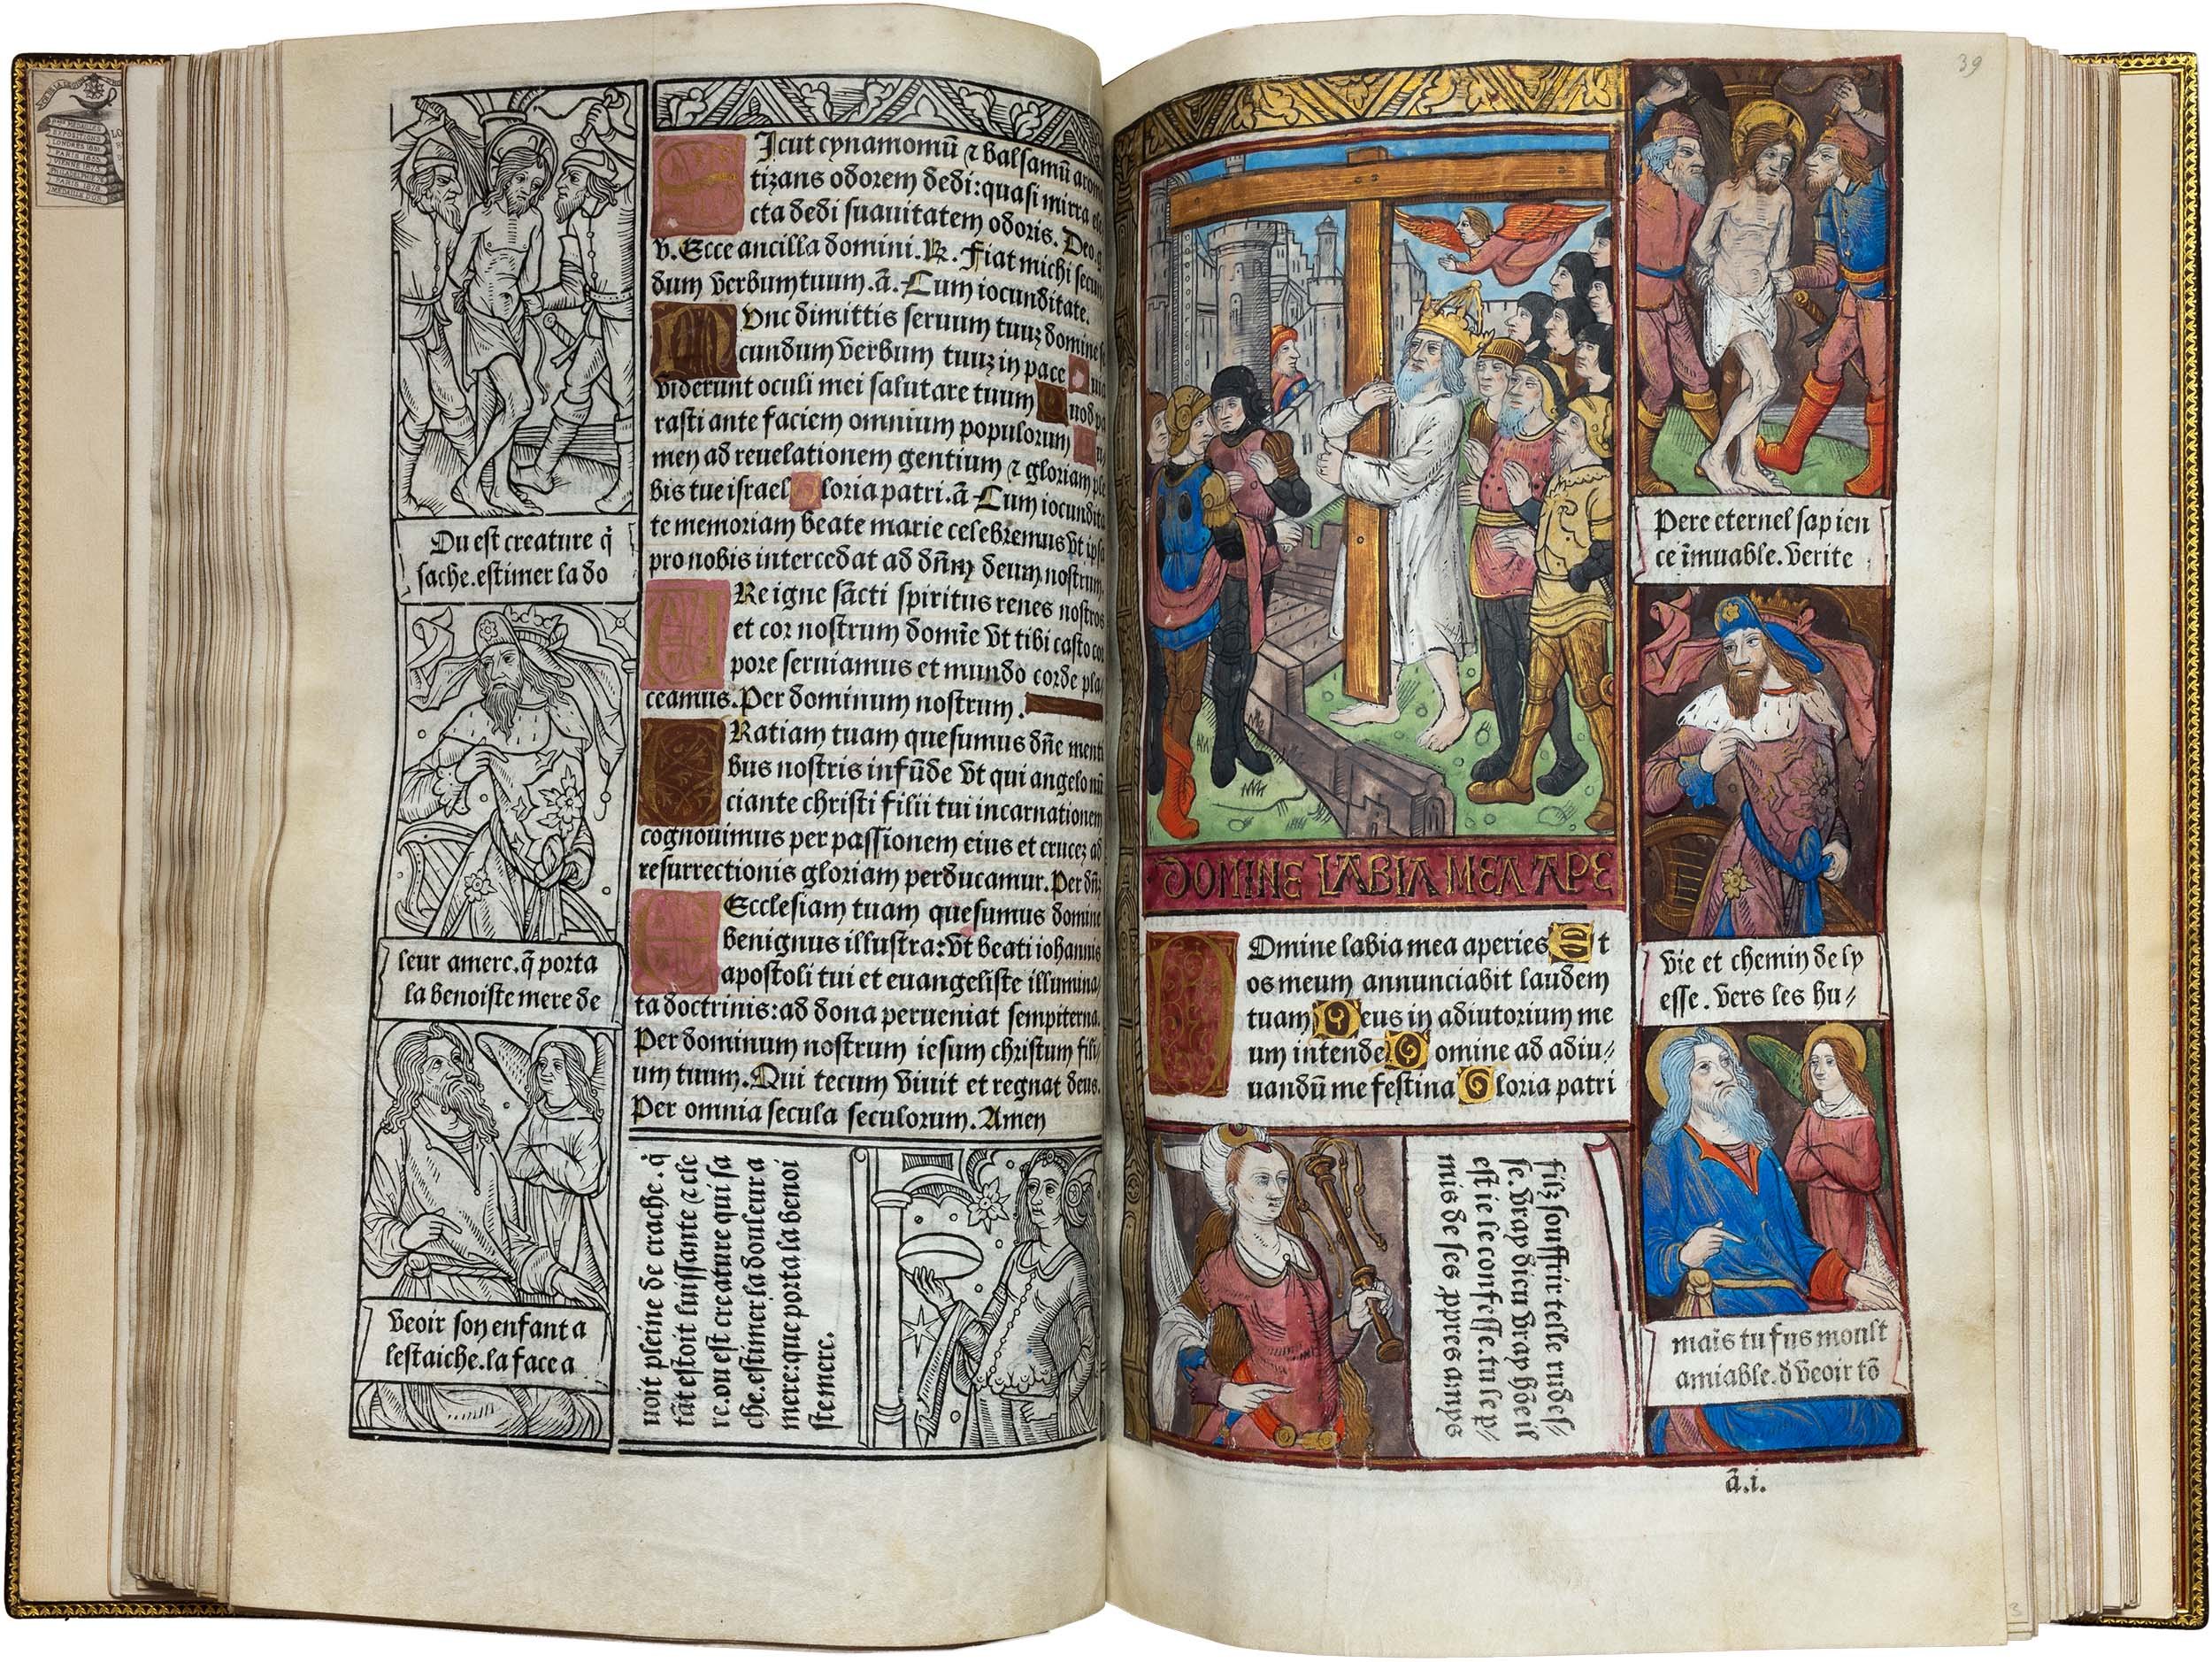 horae-bmv-20.8.1490-printed-book-of-hours-anne-de-beaujeu-de-france-grandes-heures-royales-41.jpg